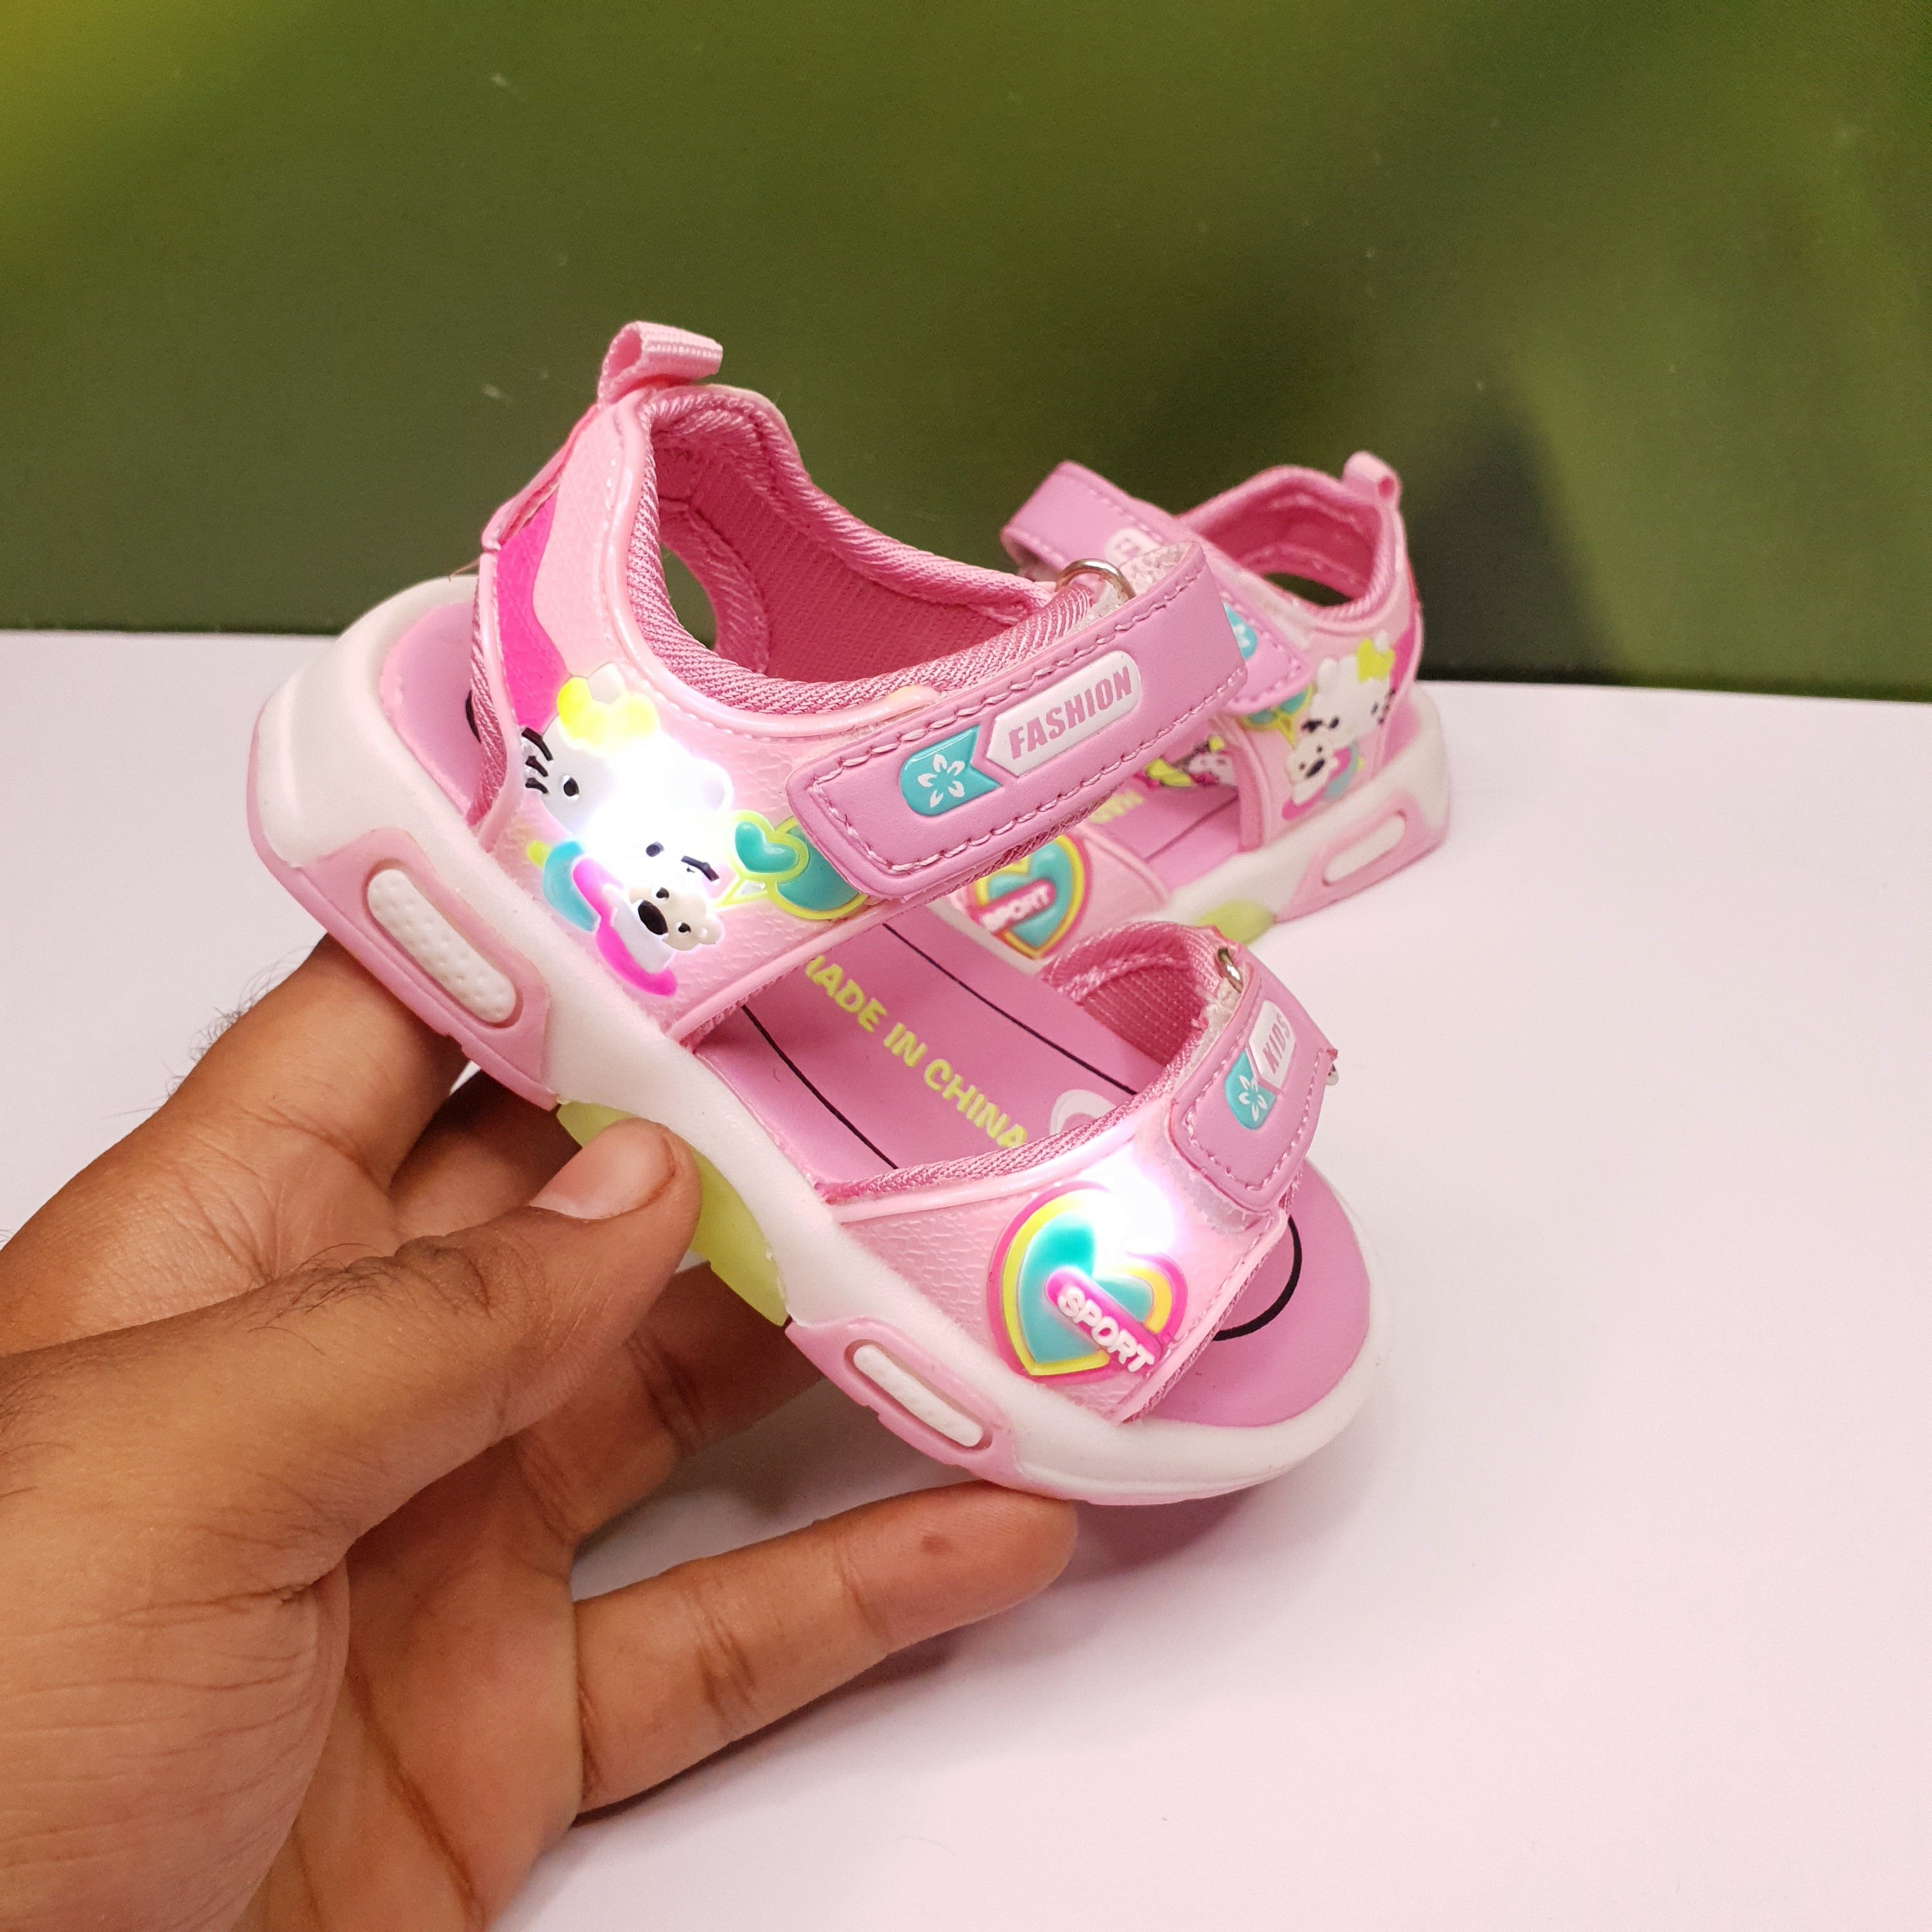 Kids Footwear 821 - Maha fashions -  Kids Footwear